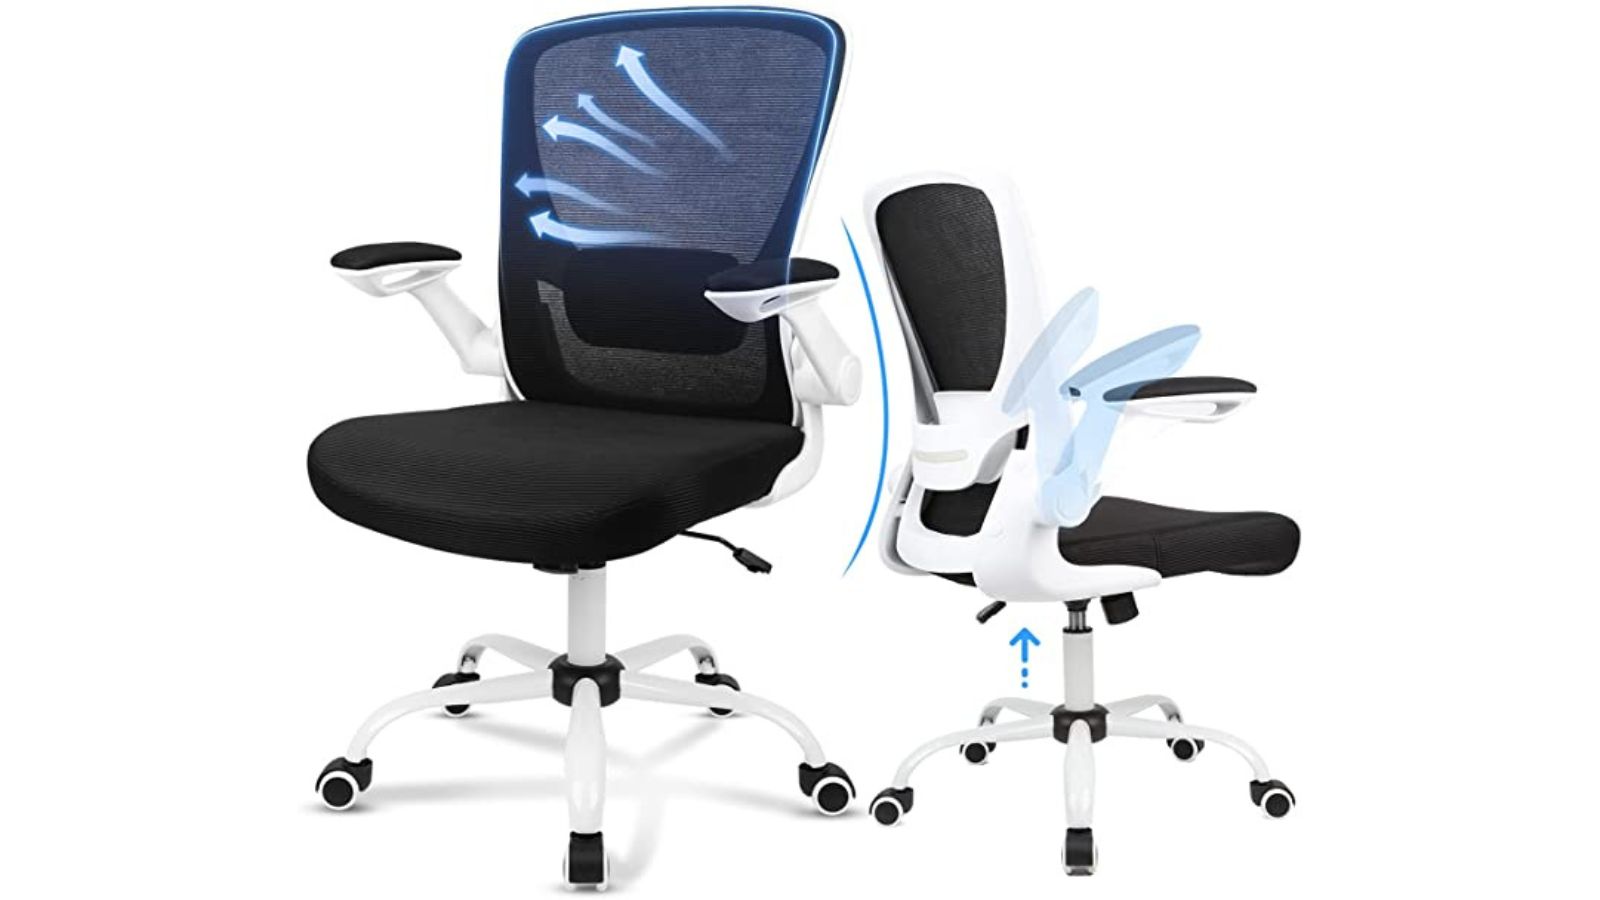 Erguosit Office Chair